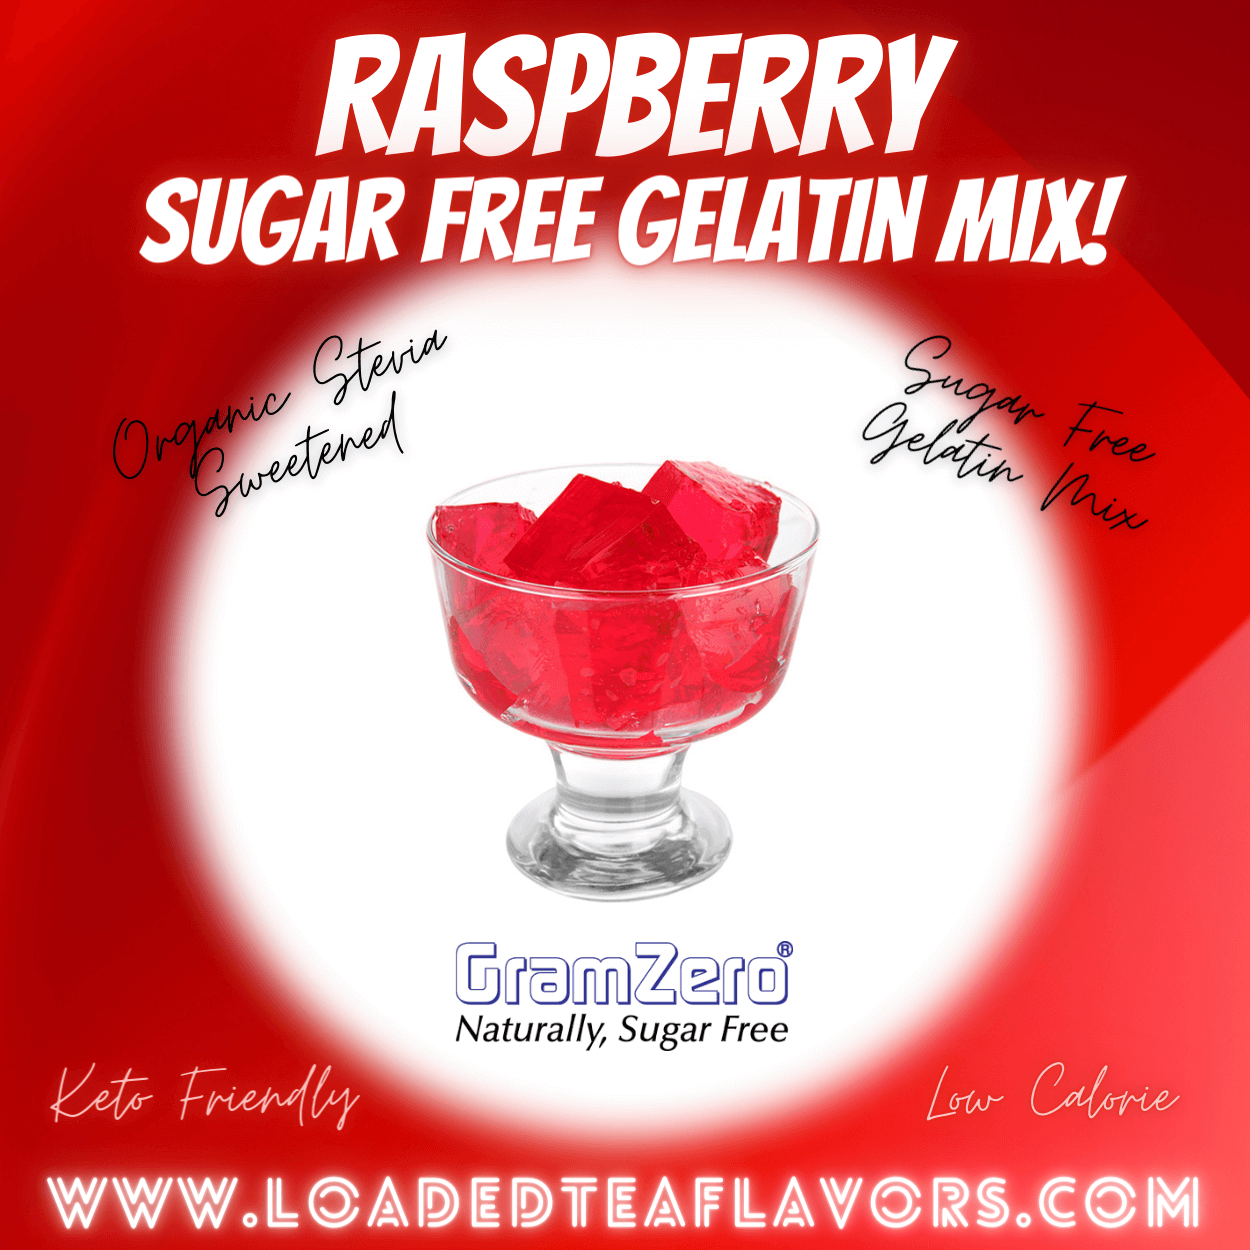 Gramzero Raspberry Sugar Free Gelatin Mix Stevia Sweetened Low Calorie Keto Friendly